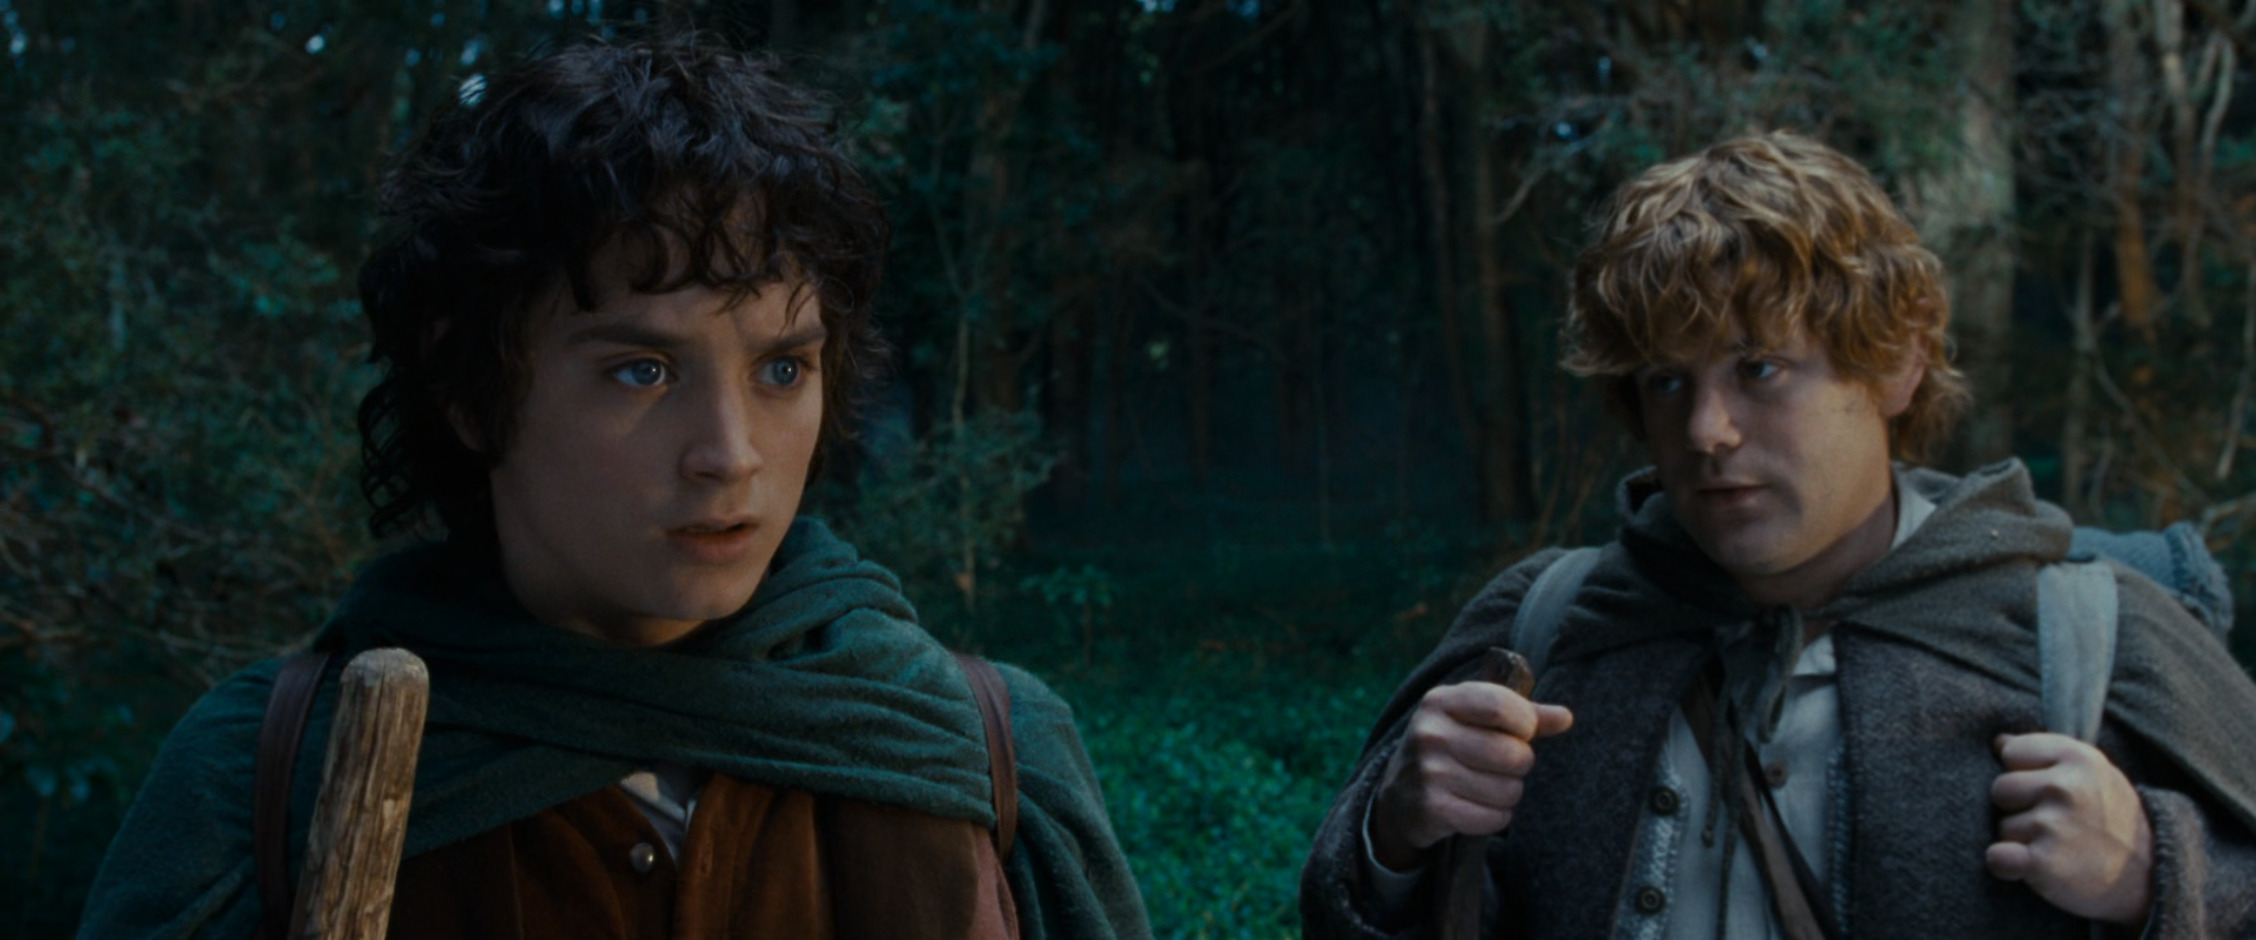 Sam with Frodo